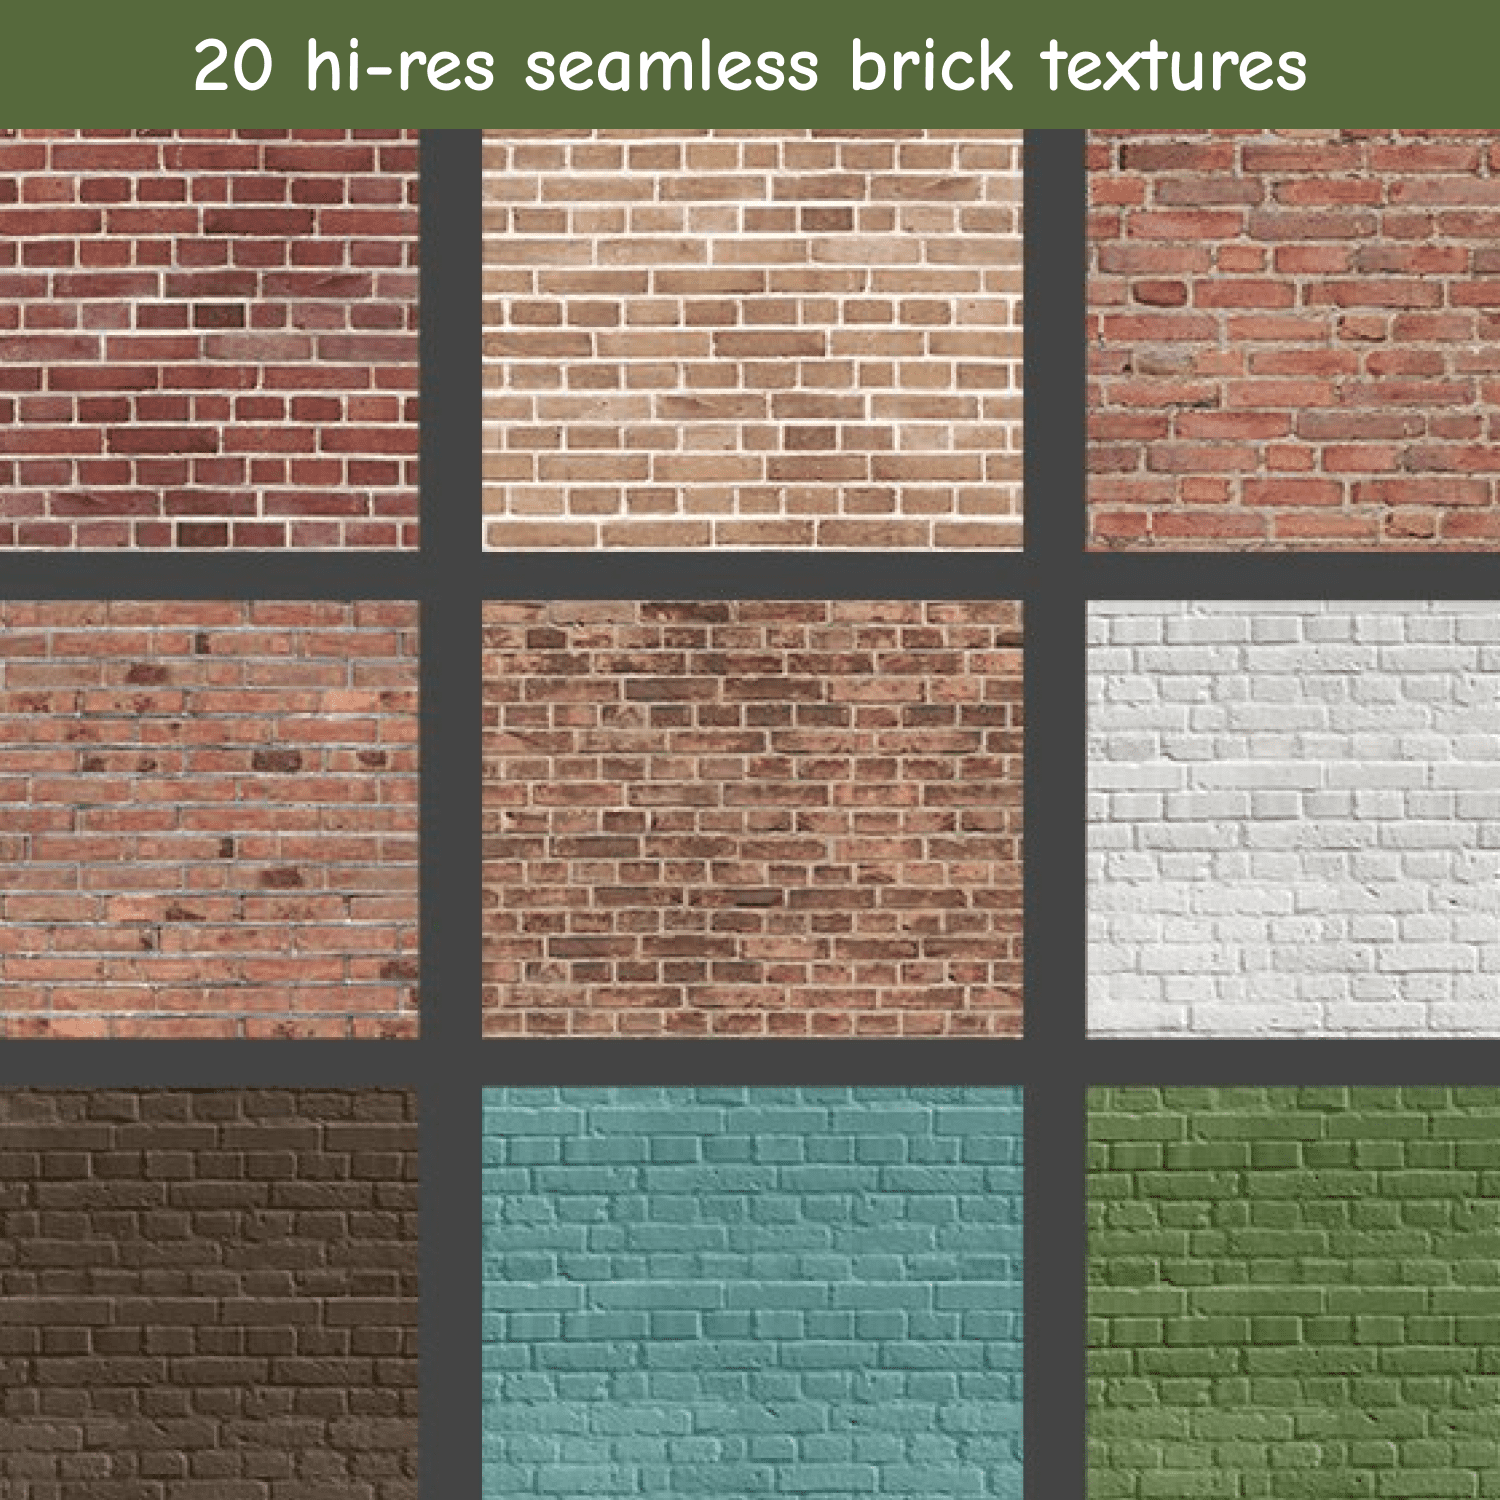 20 Hi-Res Seamless Brick Textures cover.